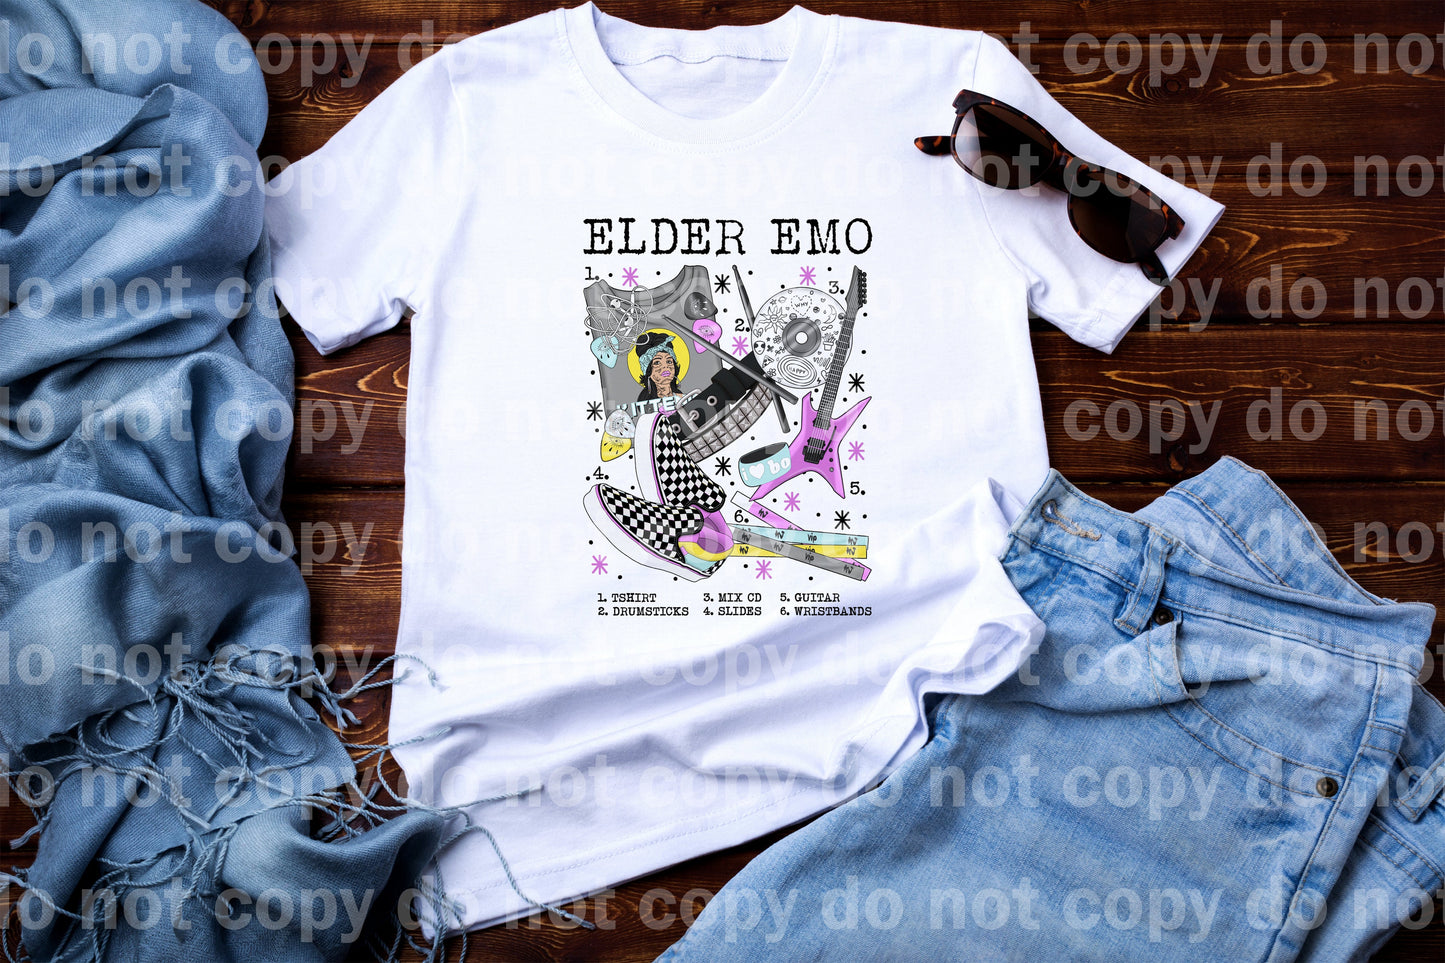 Elder Emo Vans Chart Tshirt Drumsticks Mix CD Sliders Guitar Wristbands Dream Print or Sublimation Print